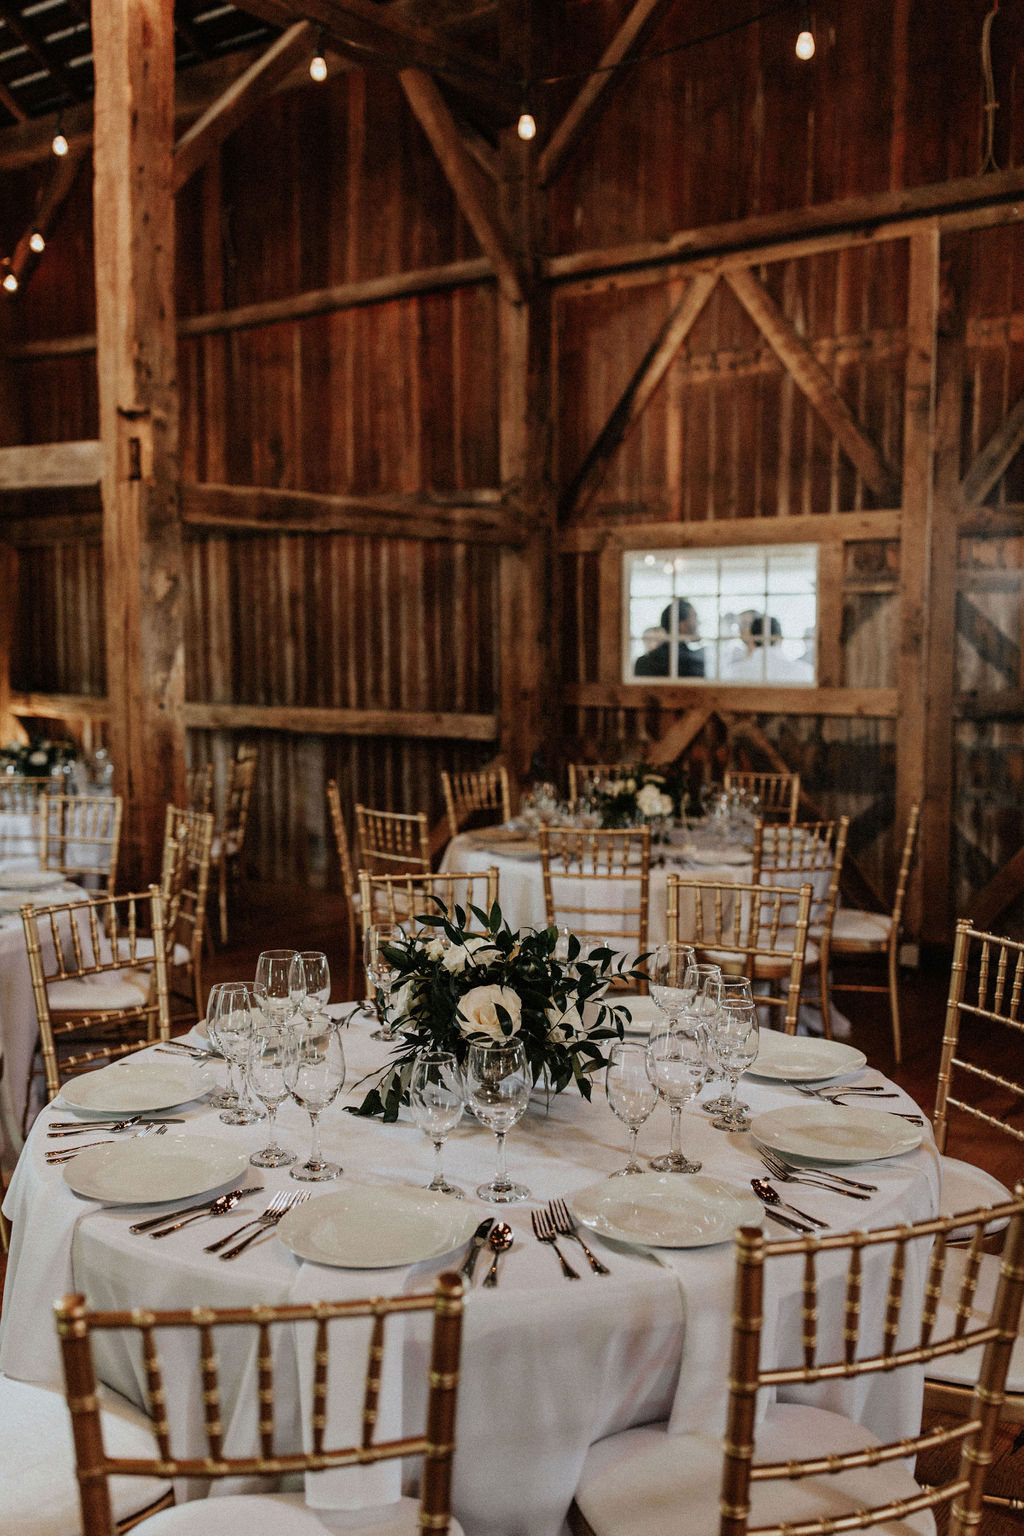 Tables set for a Hidden Vineyard Wedding Barn wedding reception.